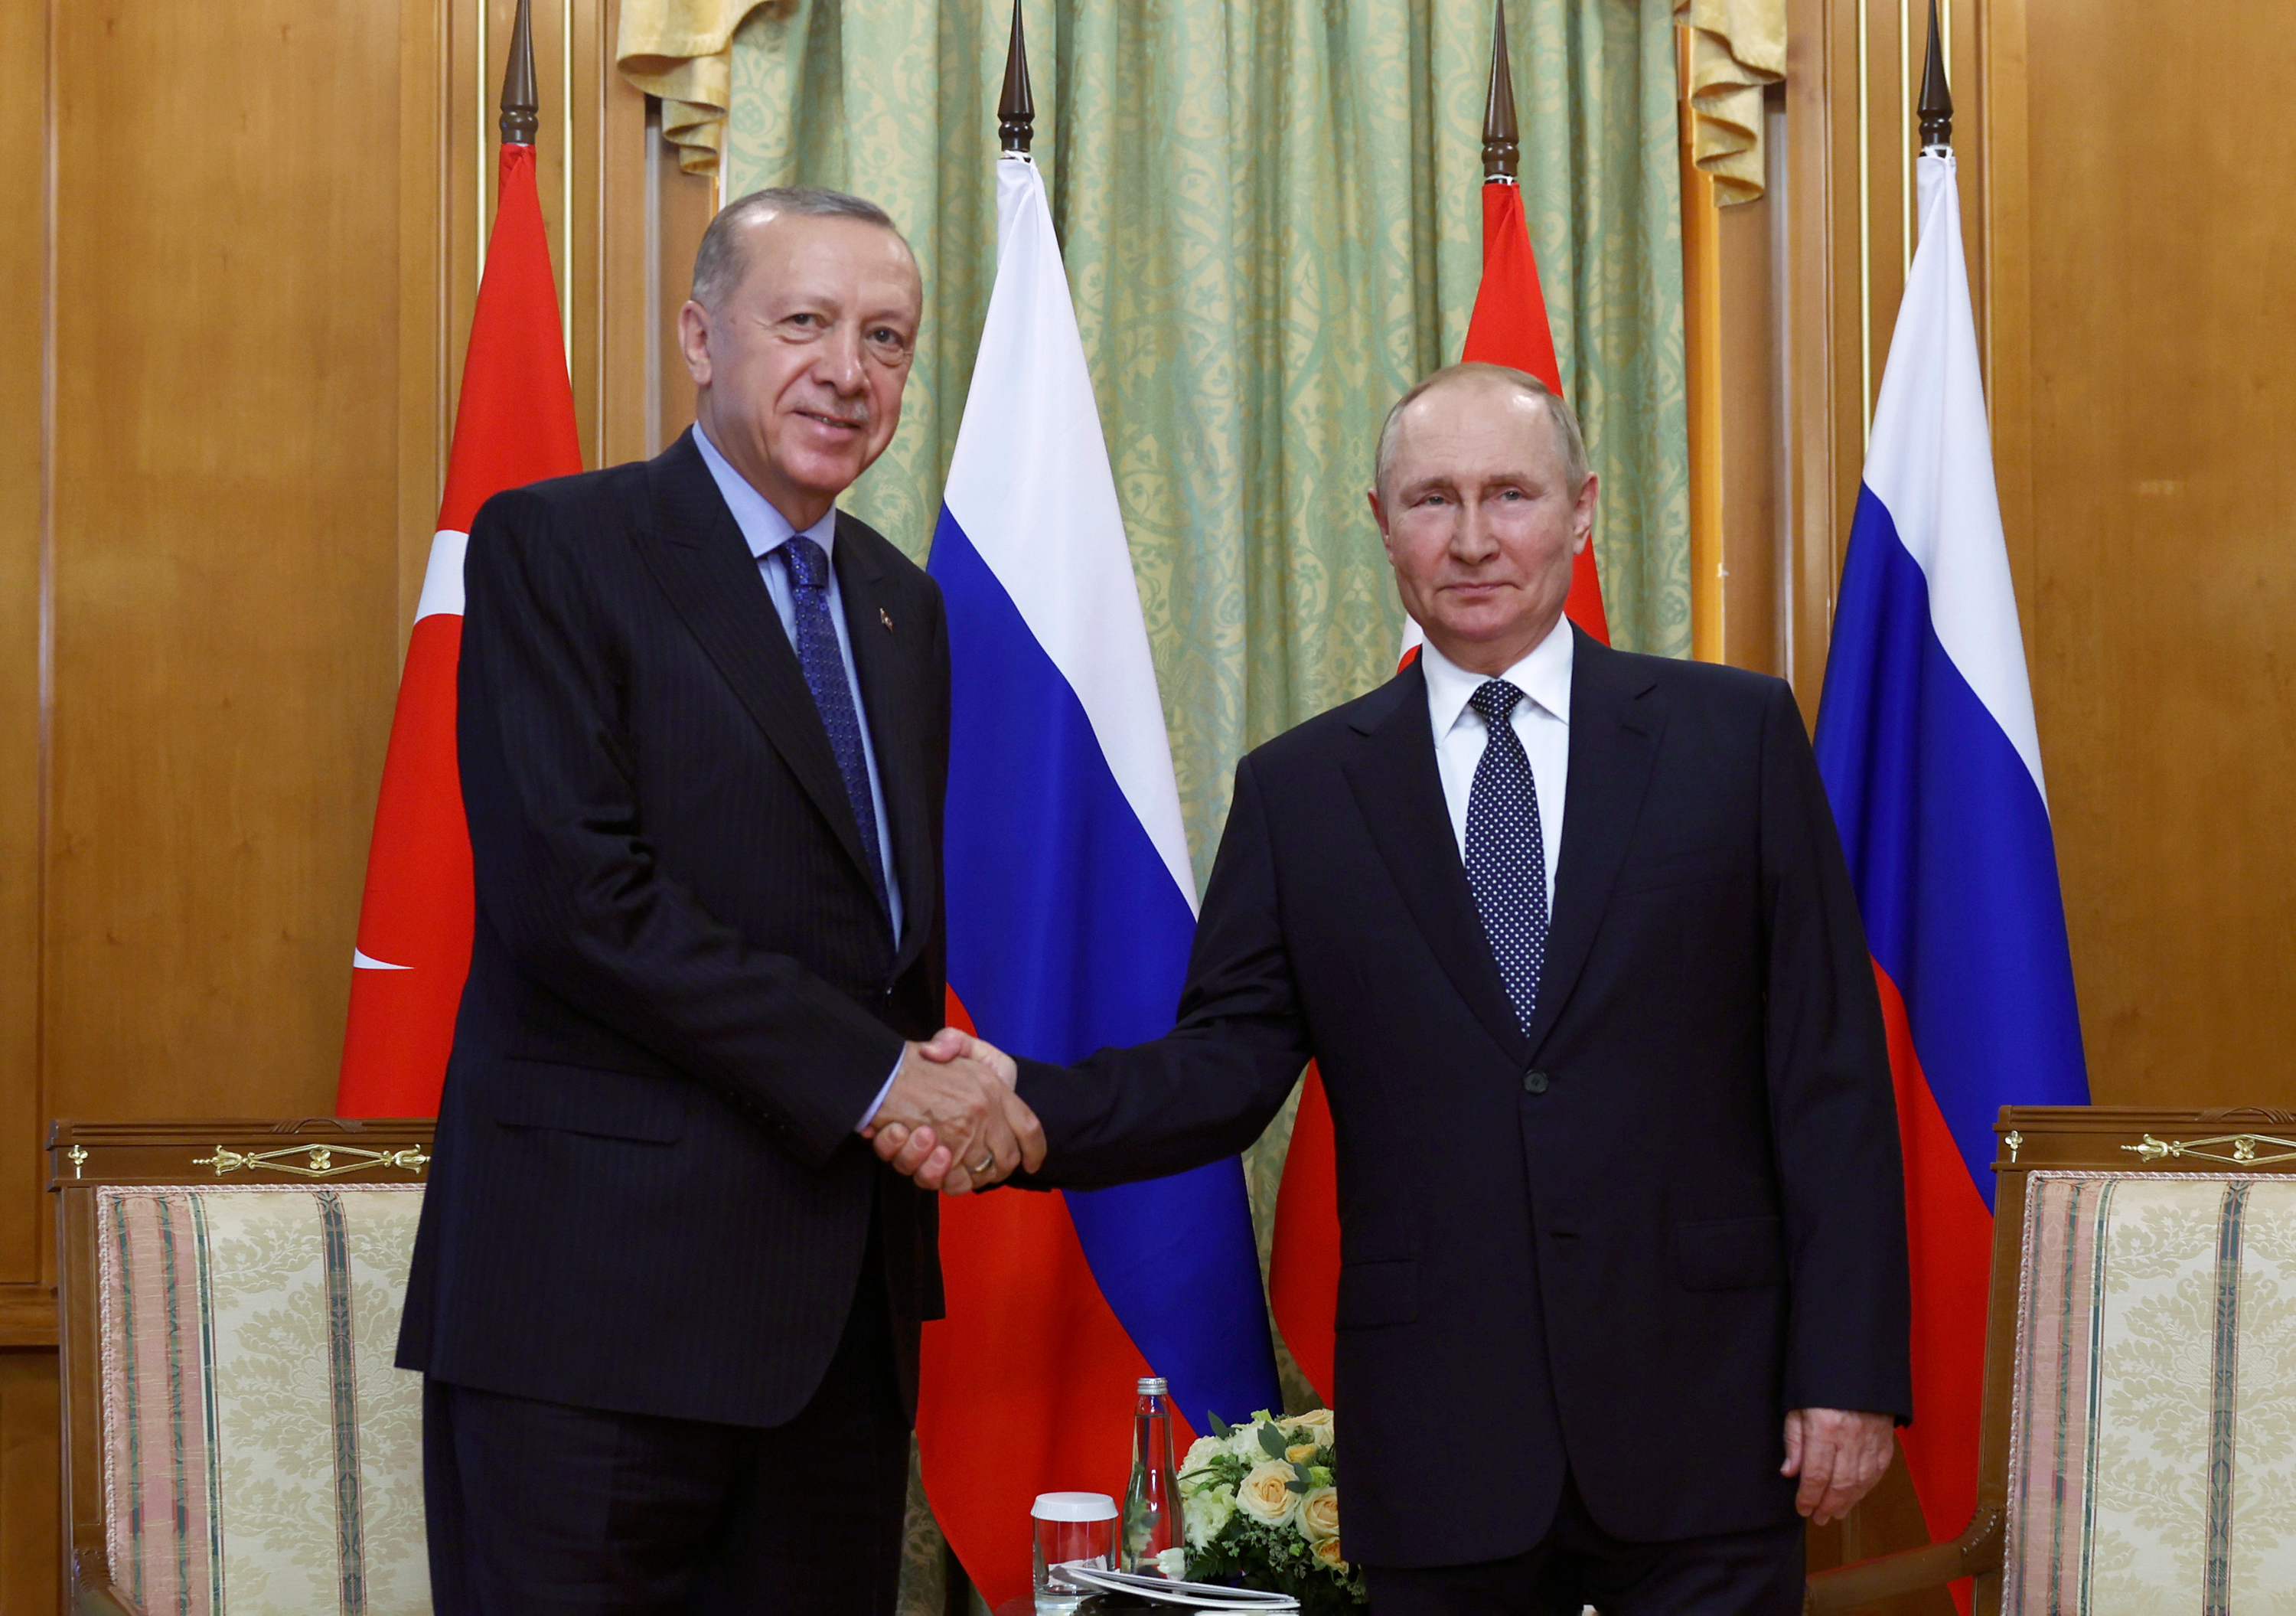 Turkish President Recep Tayyip Erdogan and Russian President Vladimir Putin shake hands prior to their meeting in Sochi, Russia on August 5. 